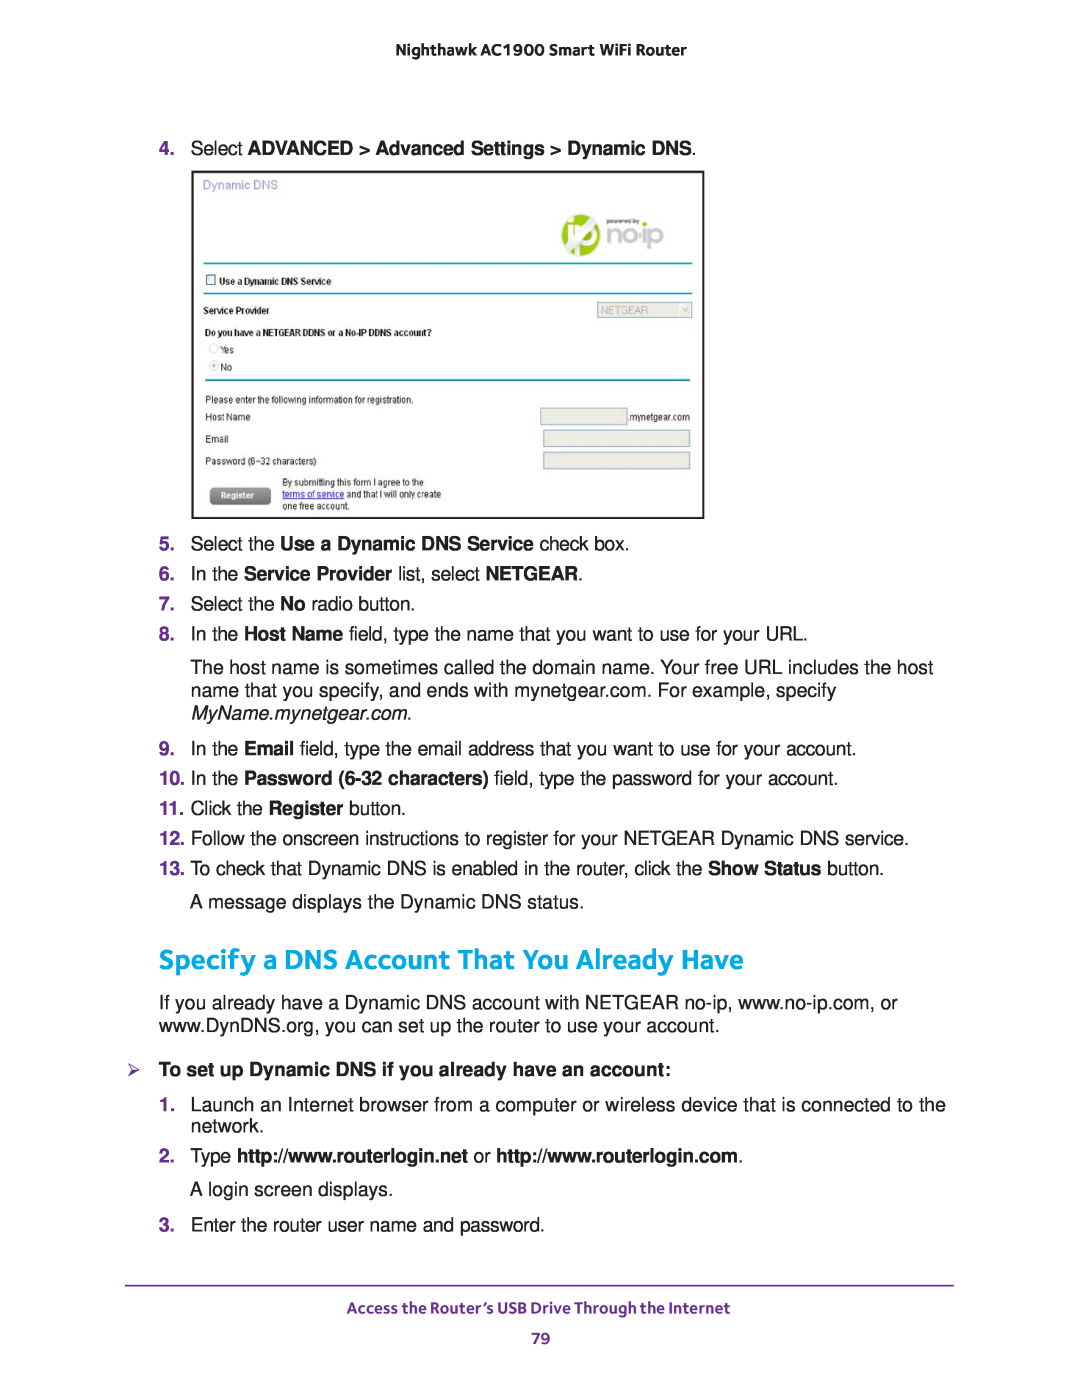 NETGEAR Model R7000 user manual Specify a DNS Account That You Already Have, Select ADVANCED Advanced Settings Dynamic DNS 